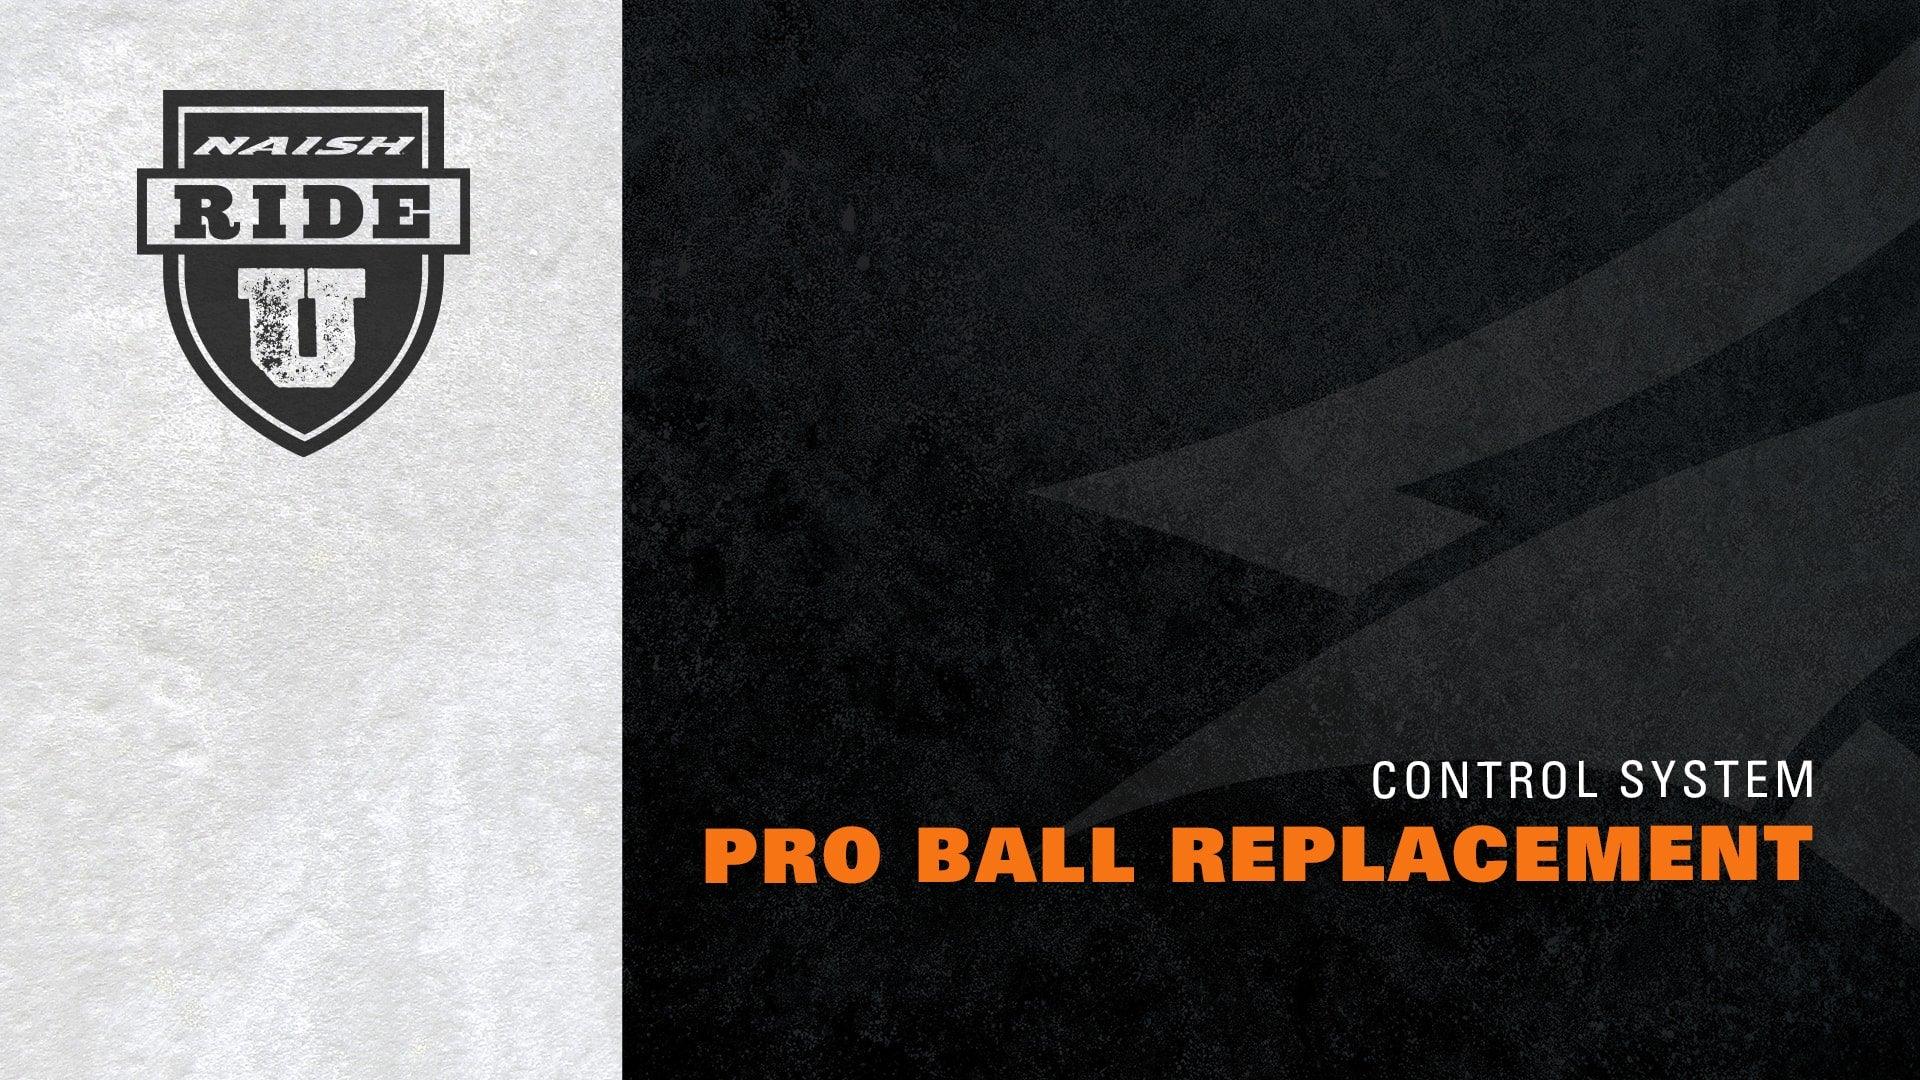 Pro Ball Replacement - Naish.com